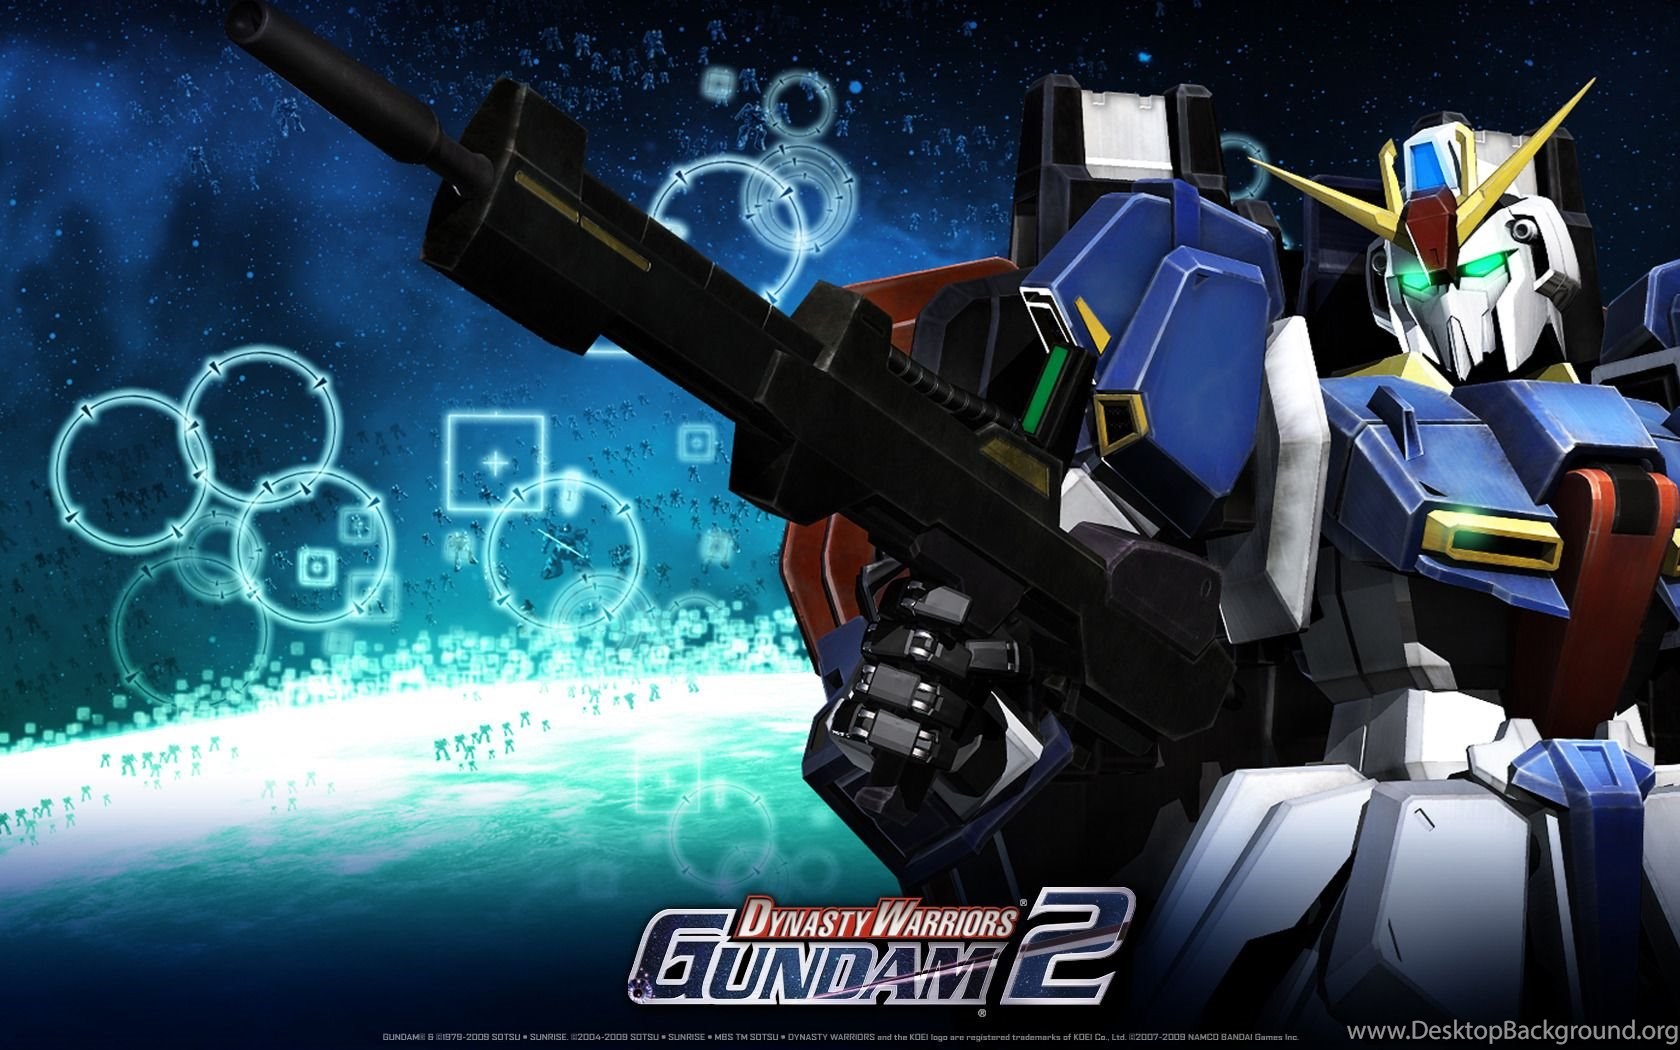 Z Gundam Free Dynasty Warriors Gundam 2 Wallpapers Gallery Best Desktop Background